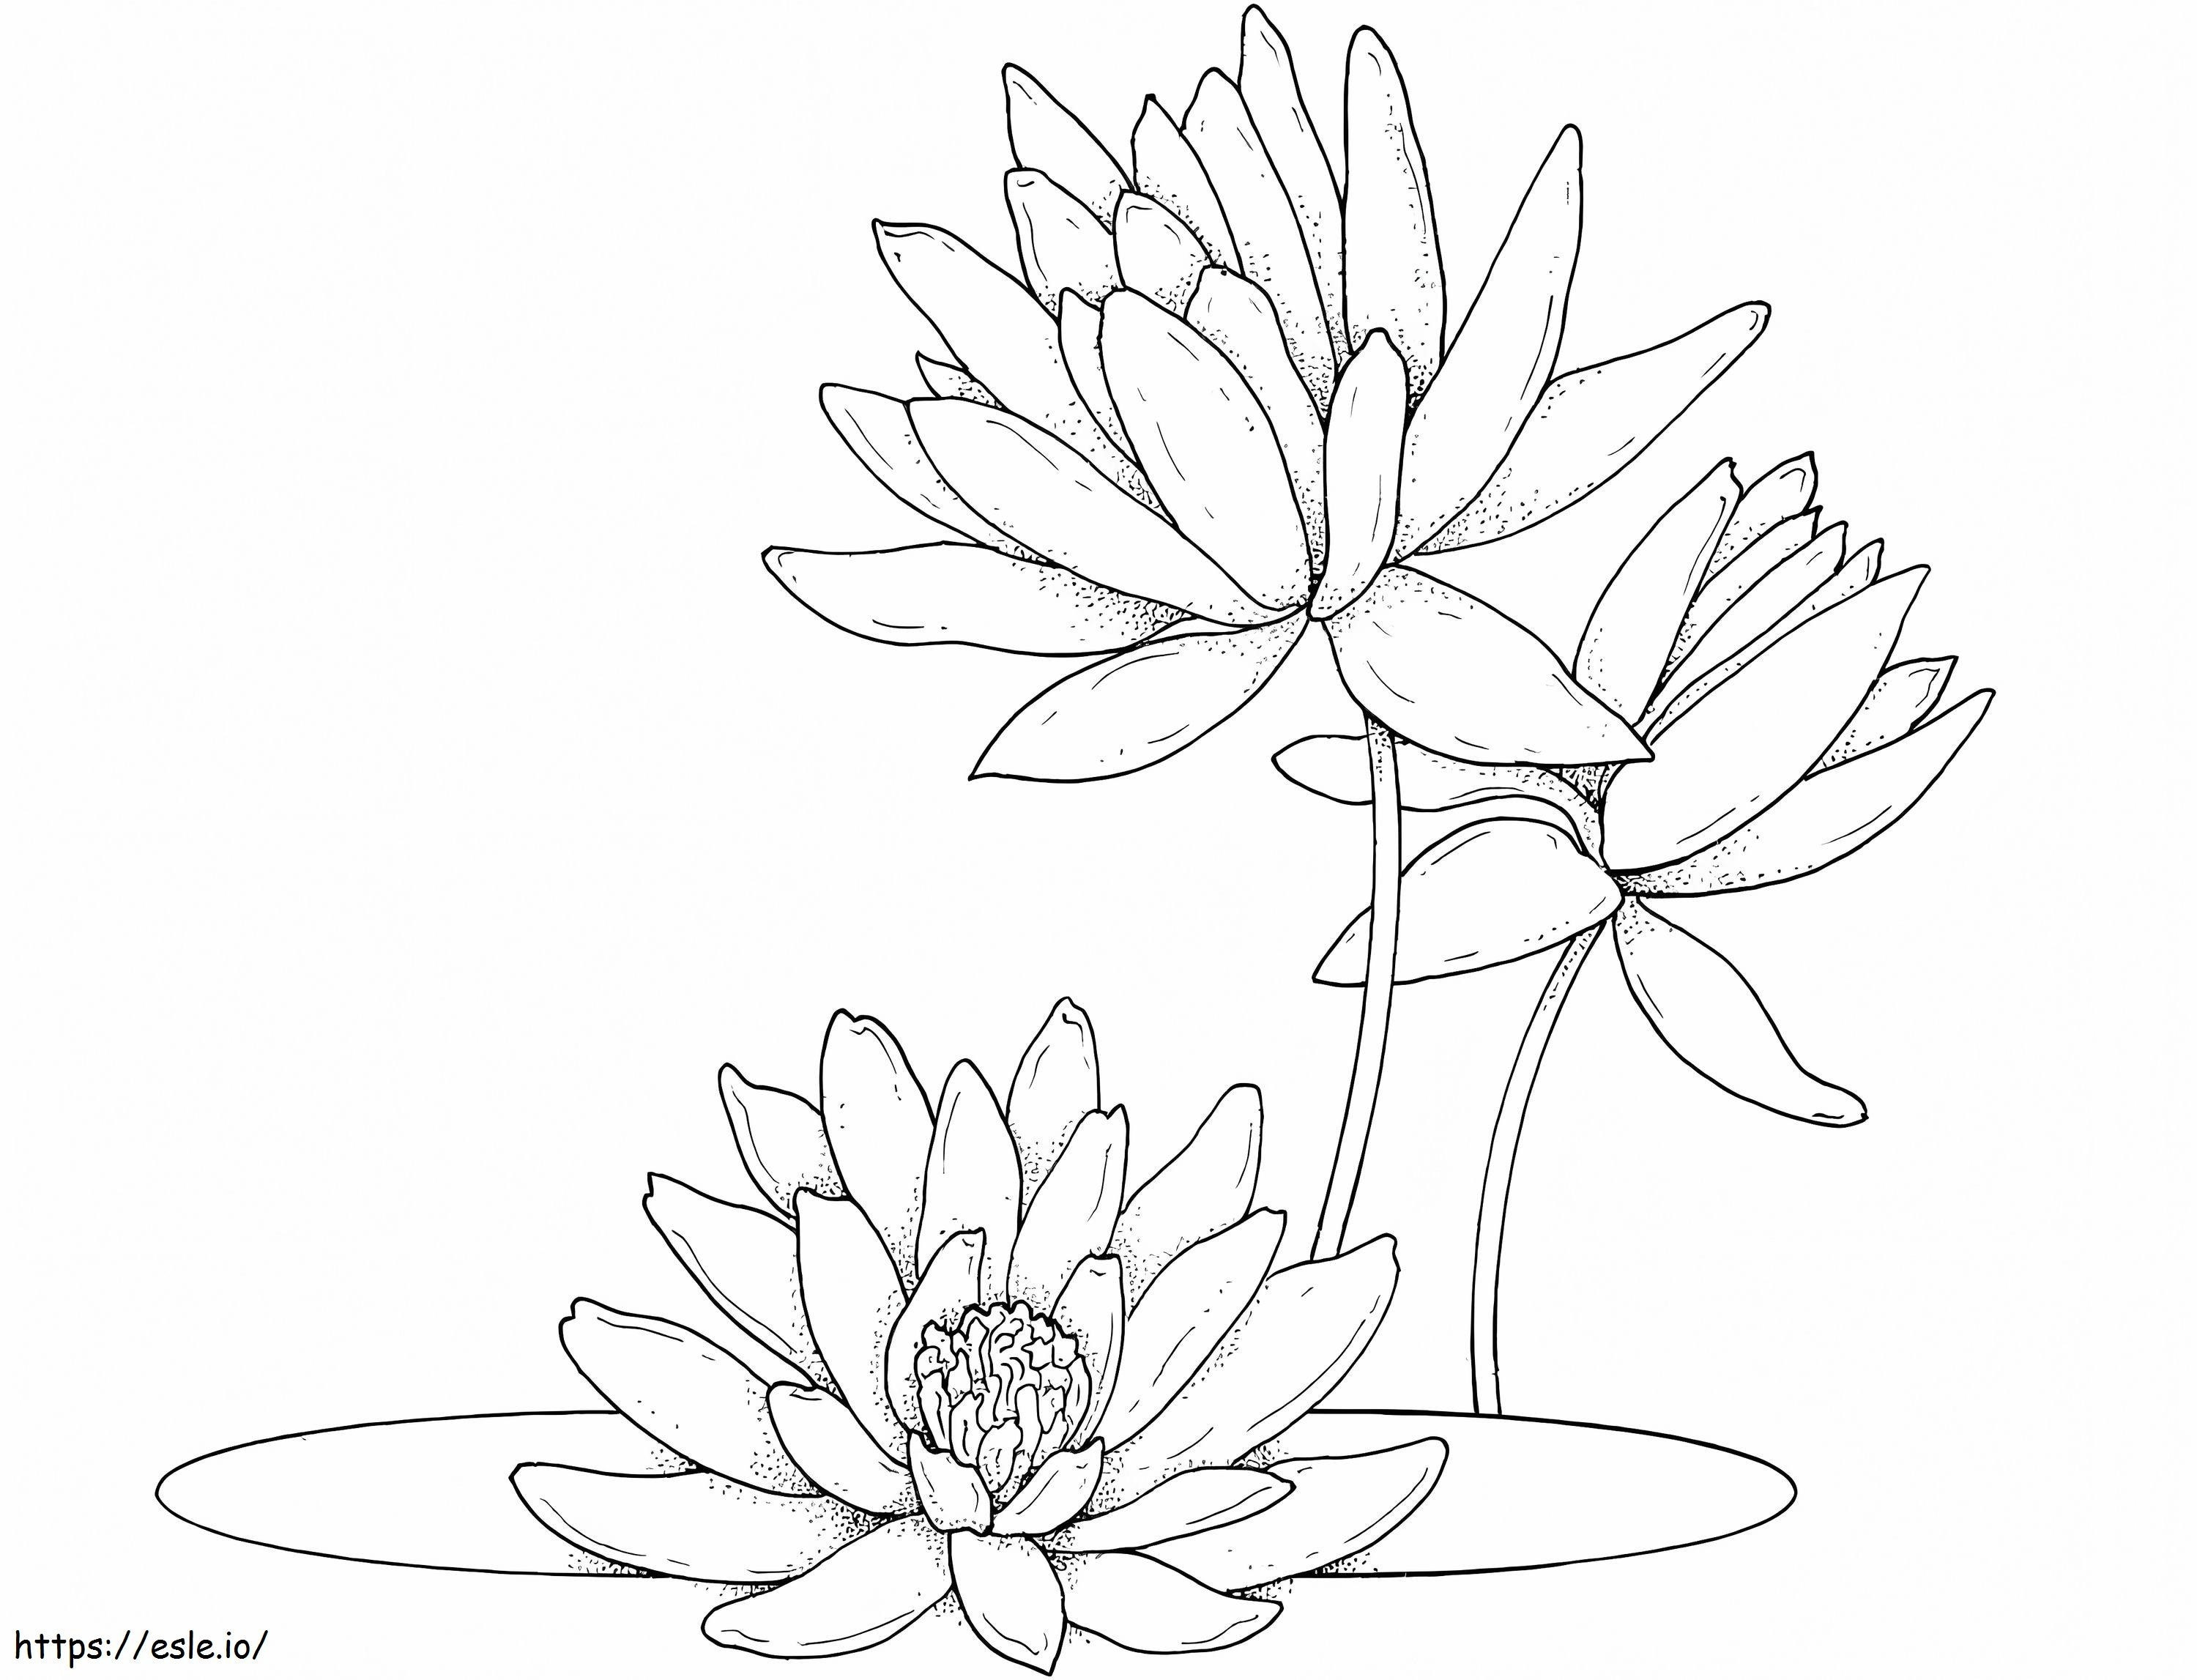 Seerosenblume 4 ausmalbilder